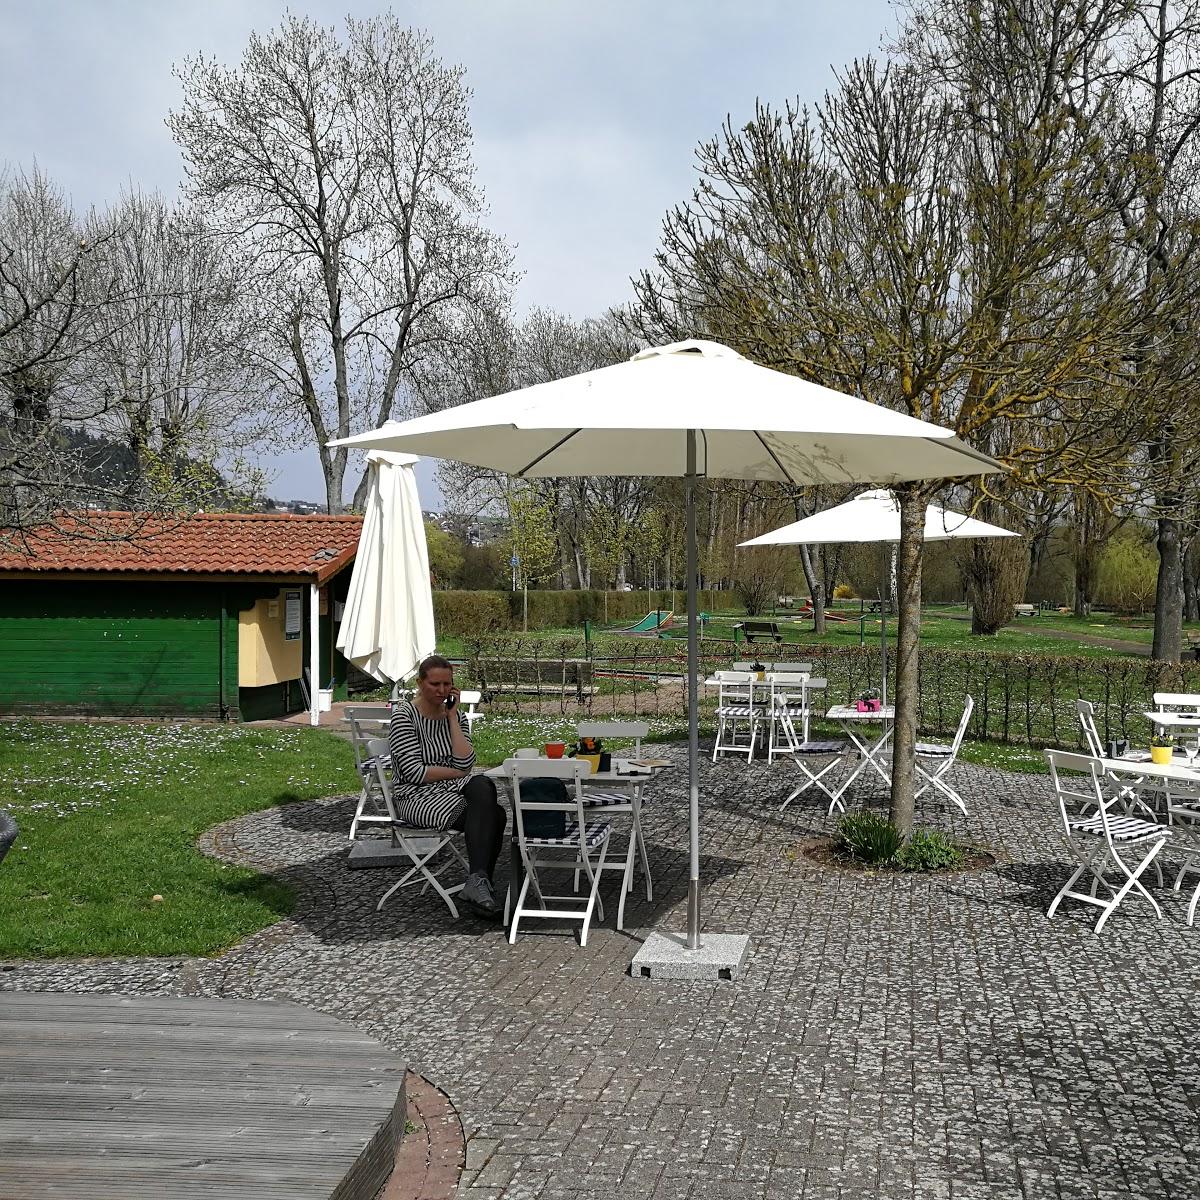 Restaurant "Nohfels Park -" in Bad Sobernheim